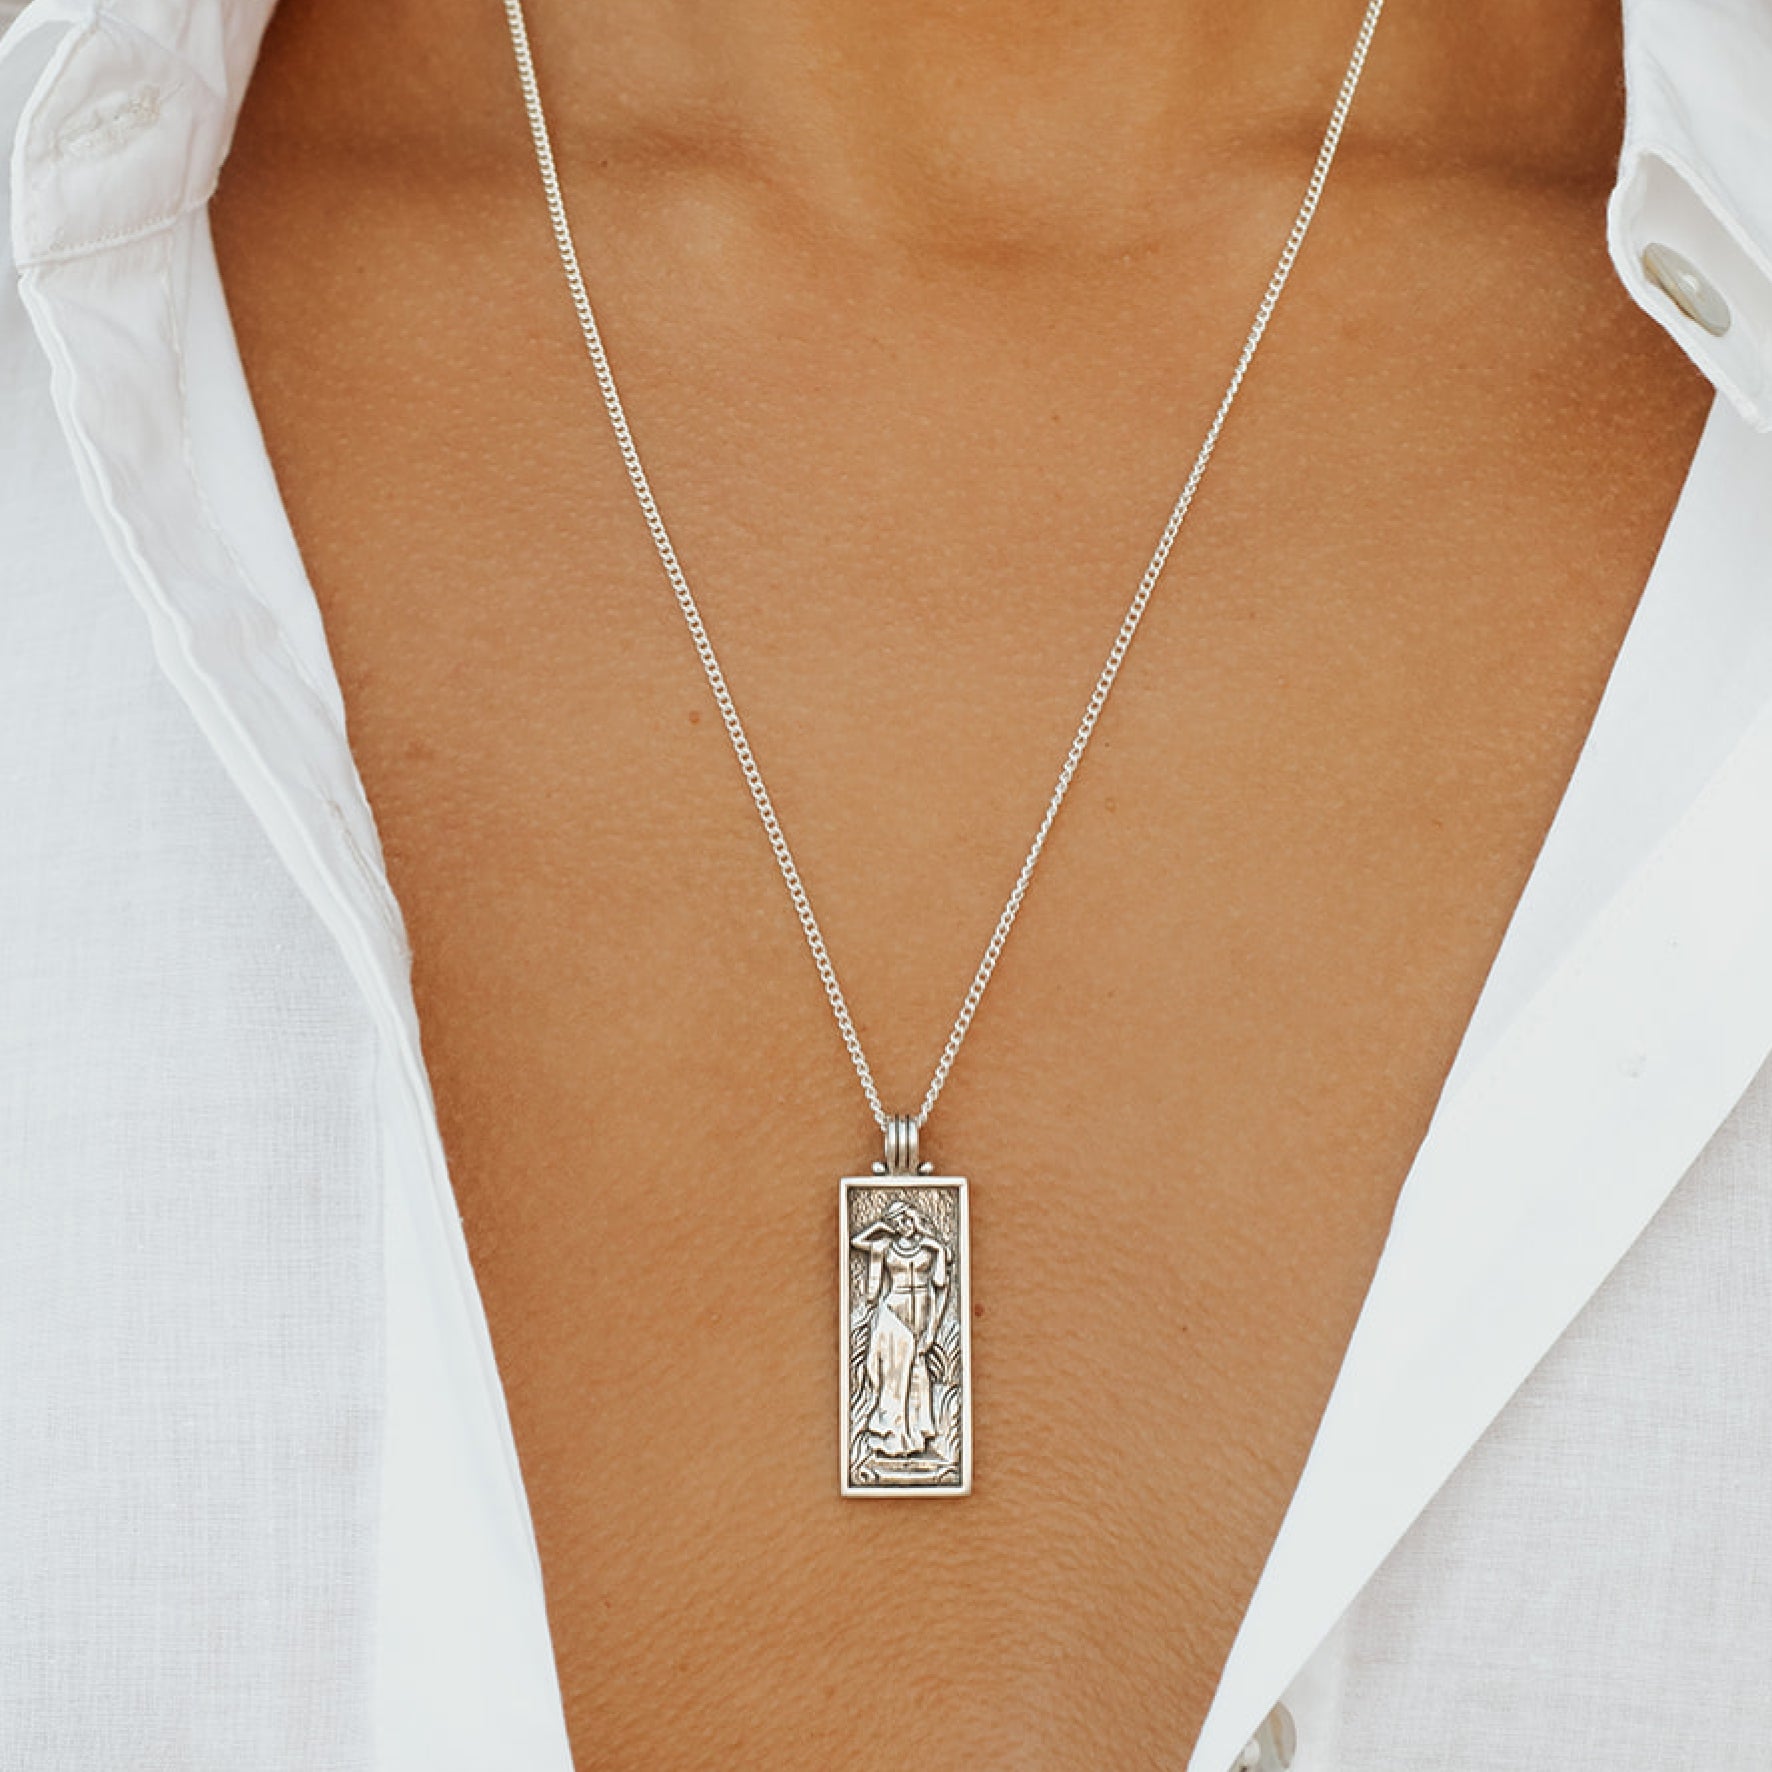 Freyja Goddess of Love Pendant Necklace - Silver